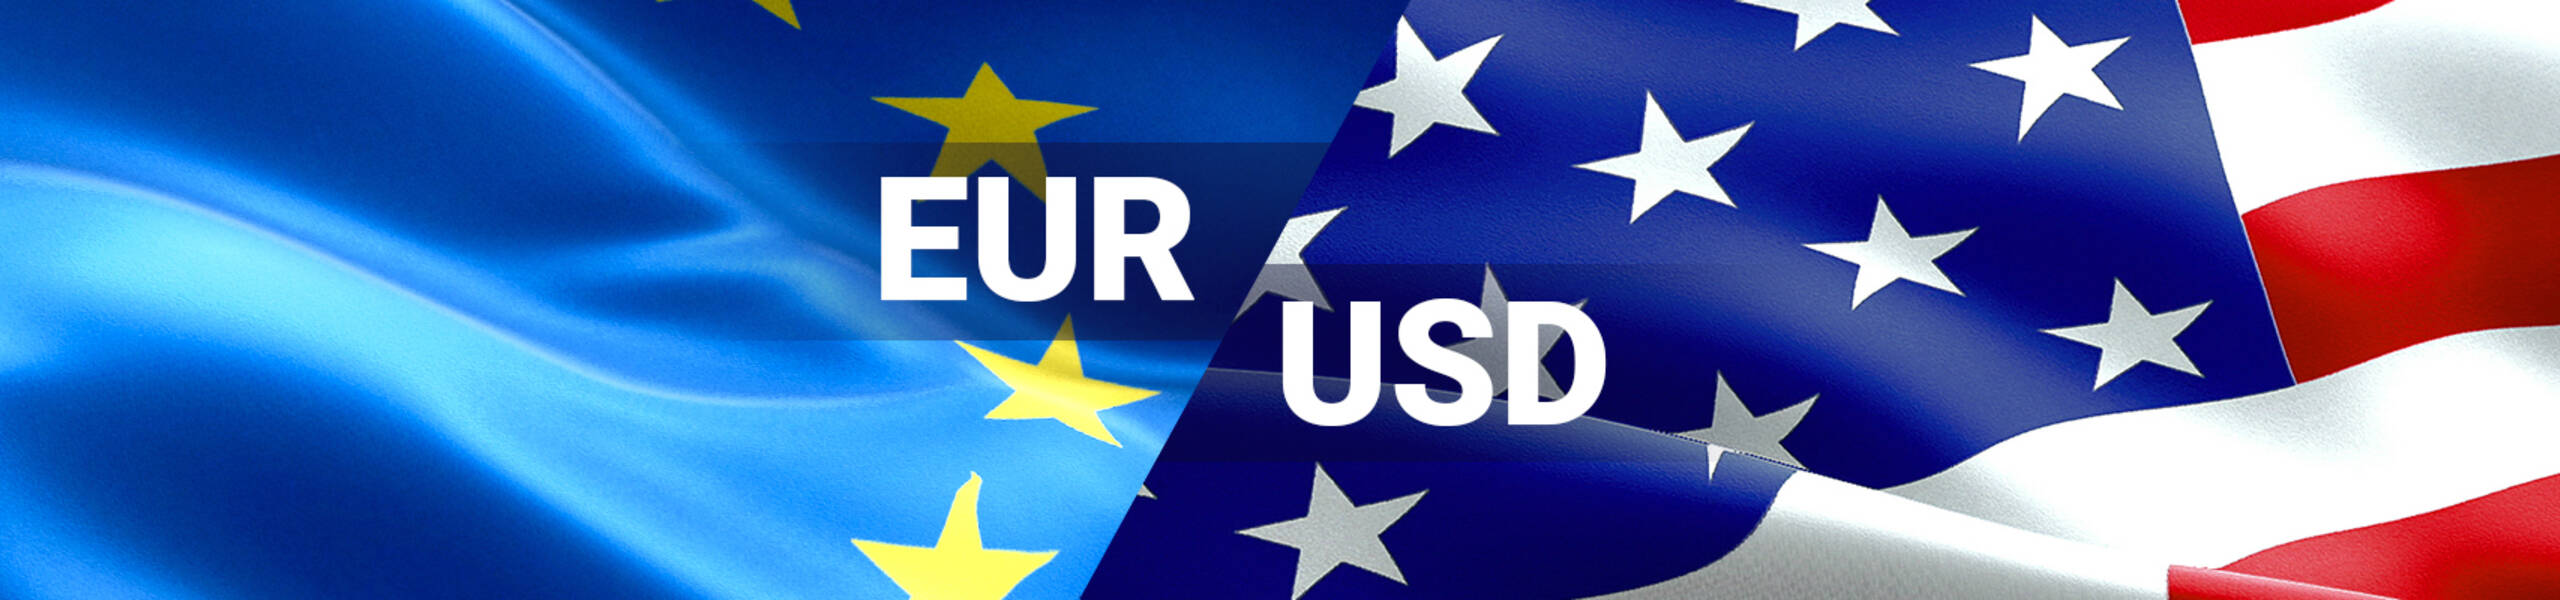 EUR/USD close to finish a correction